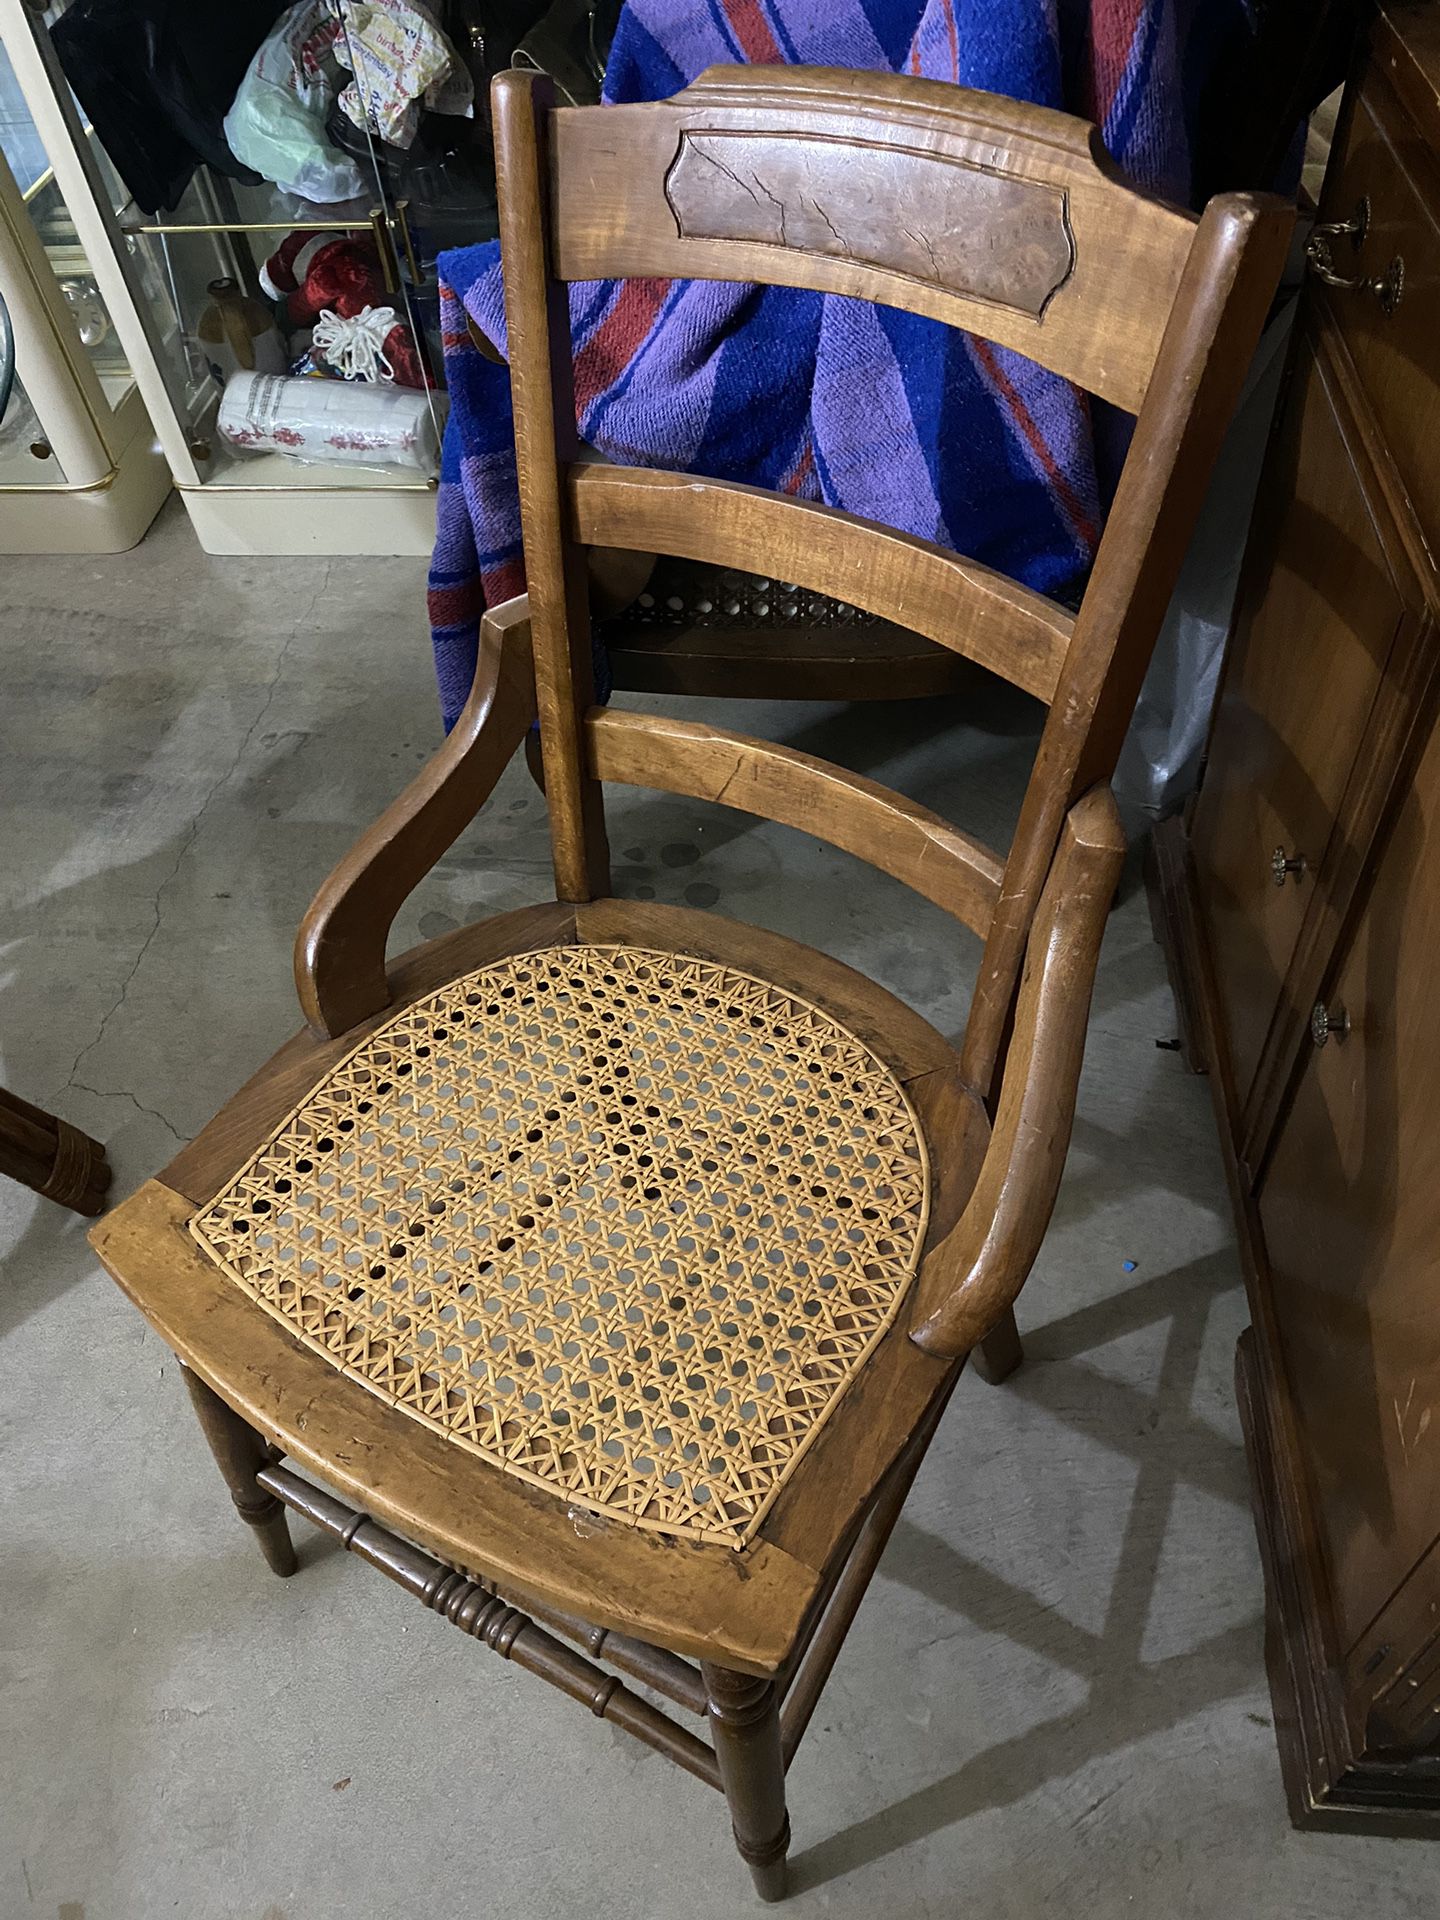 Child’s Vintage Cane Chair $10.00